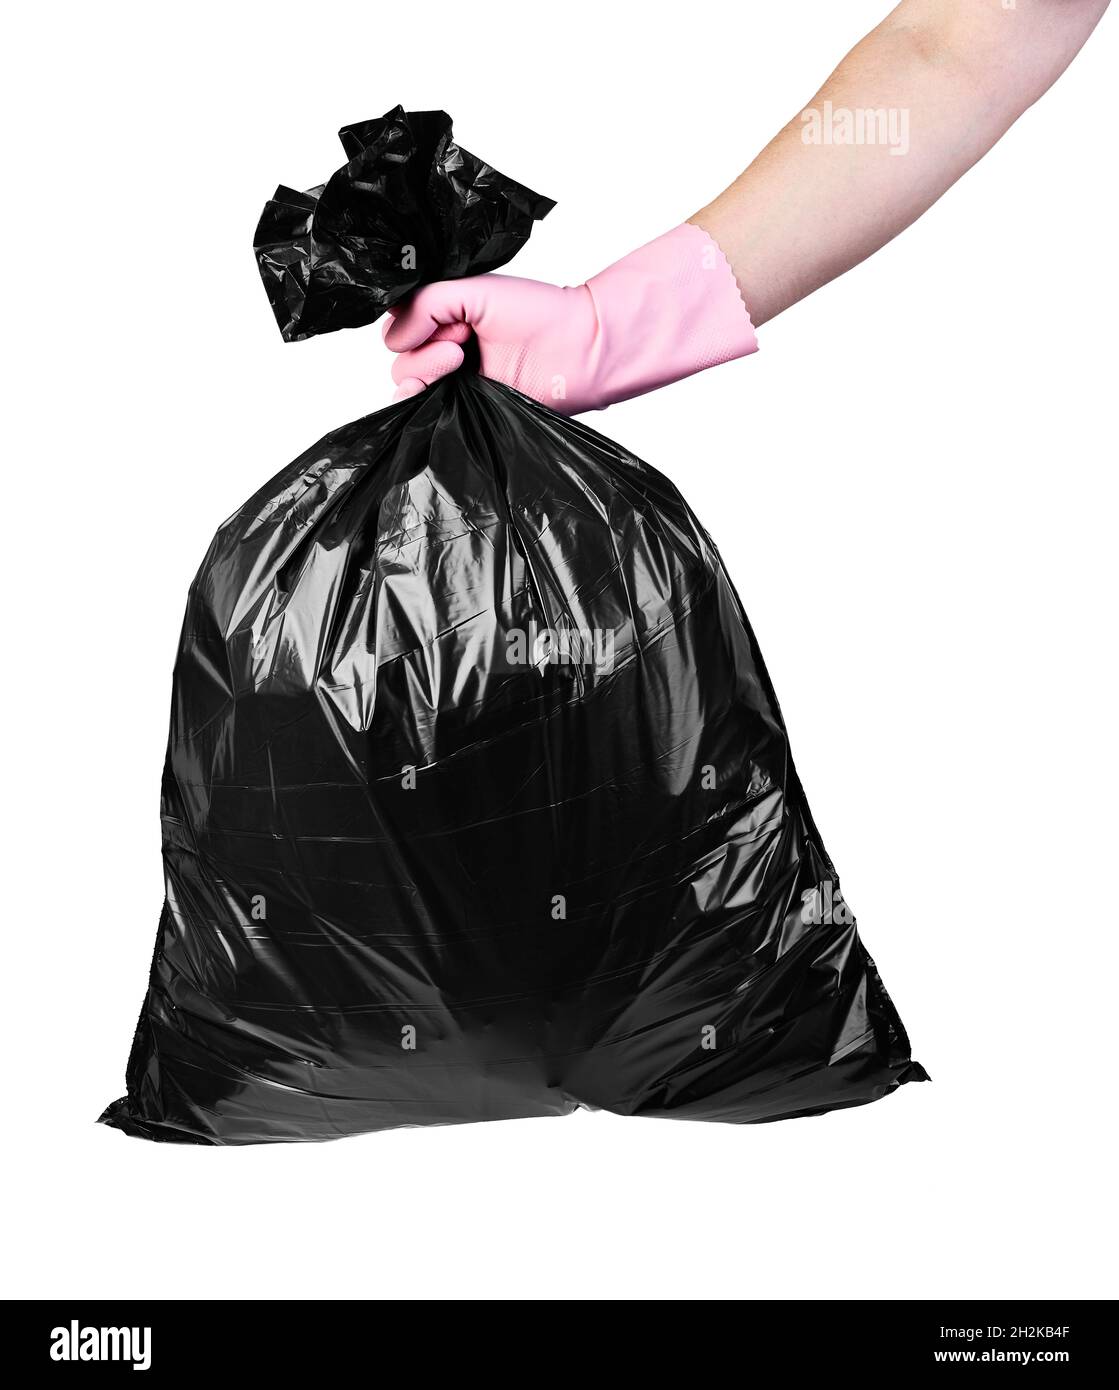 https://c8.alamy.com/comp/2H2KB4F/plastic-bag-trash-waste-enviroment-garbage-pollution-hand-holding-glove-protective-wear-rubbish-2H2KB4F.jpg